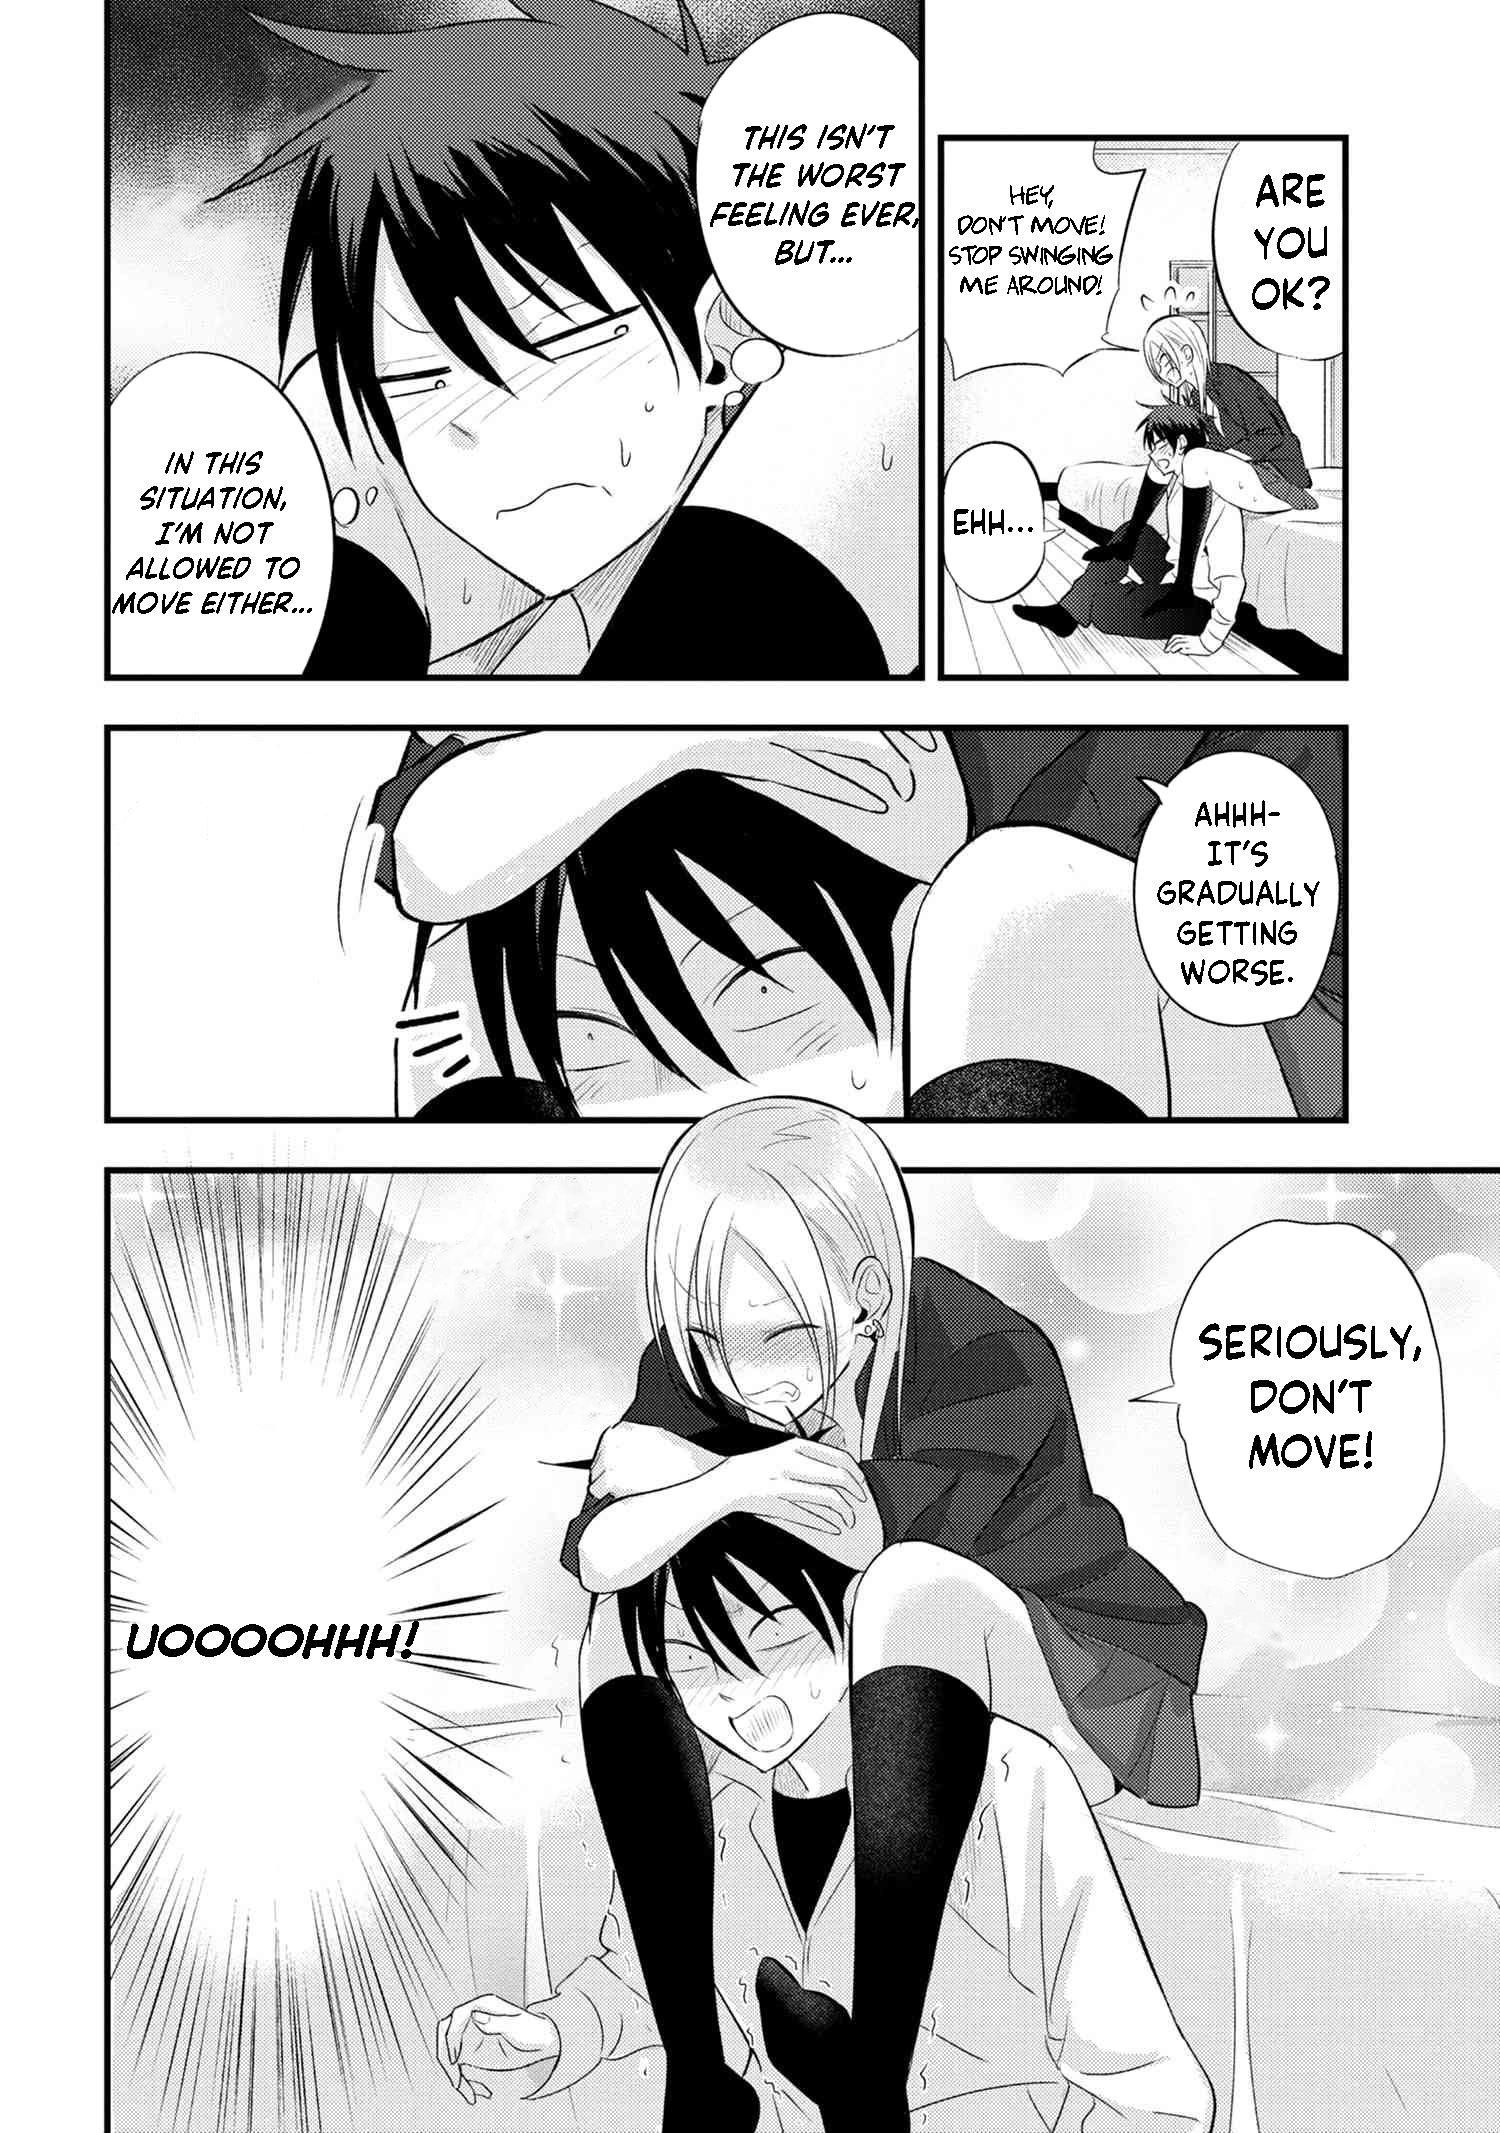 Please Go Home, Akutsu-San! - Page 3